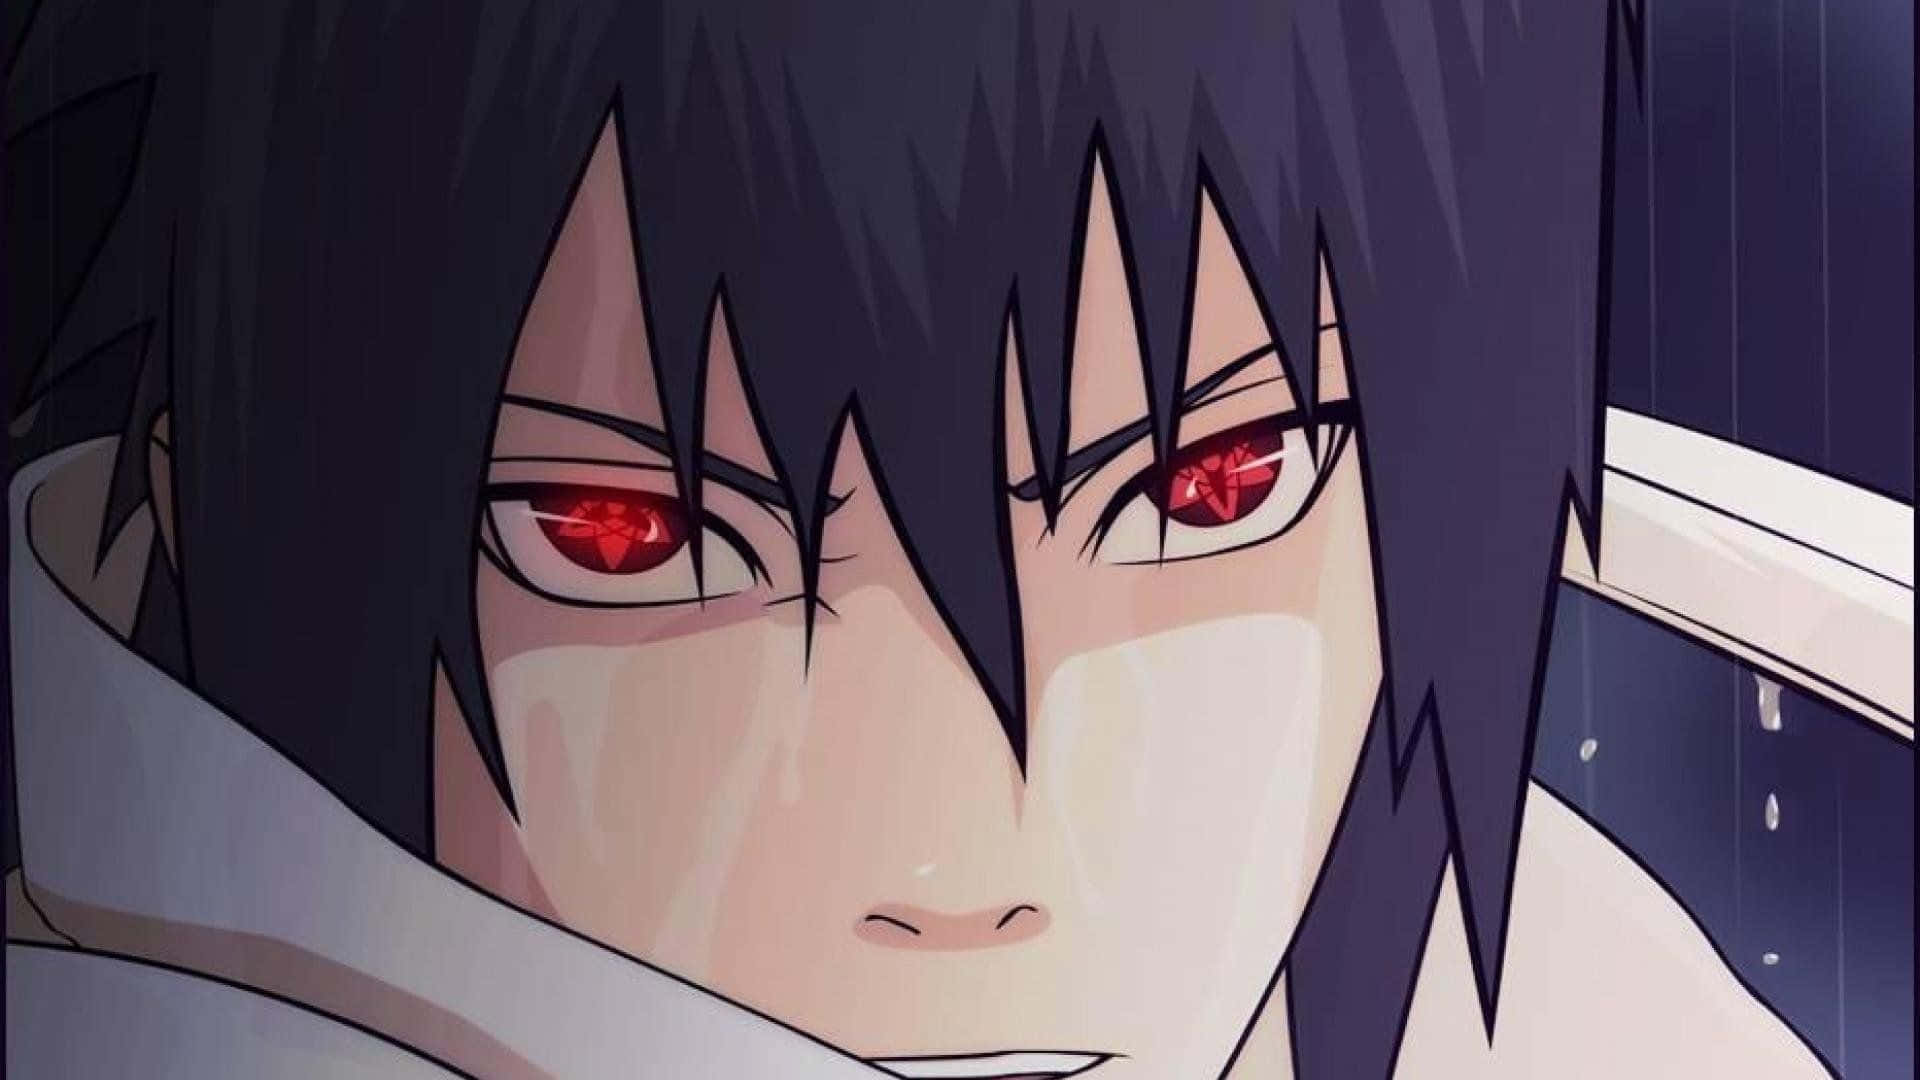 Impassiv men intens - Sasuke ansigts tapet Wallpaper